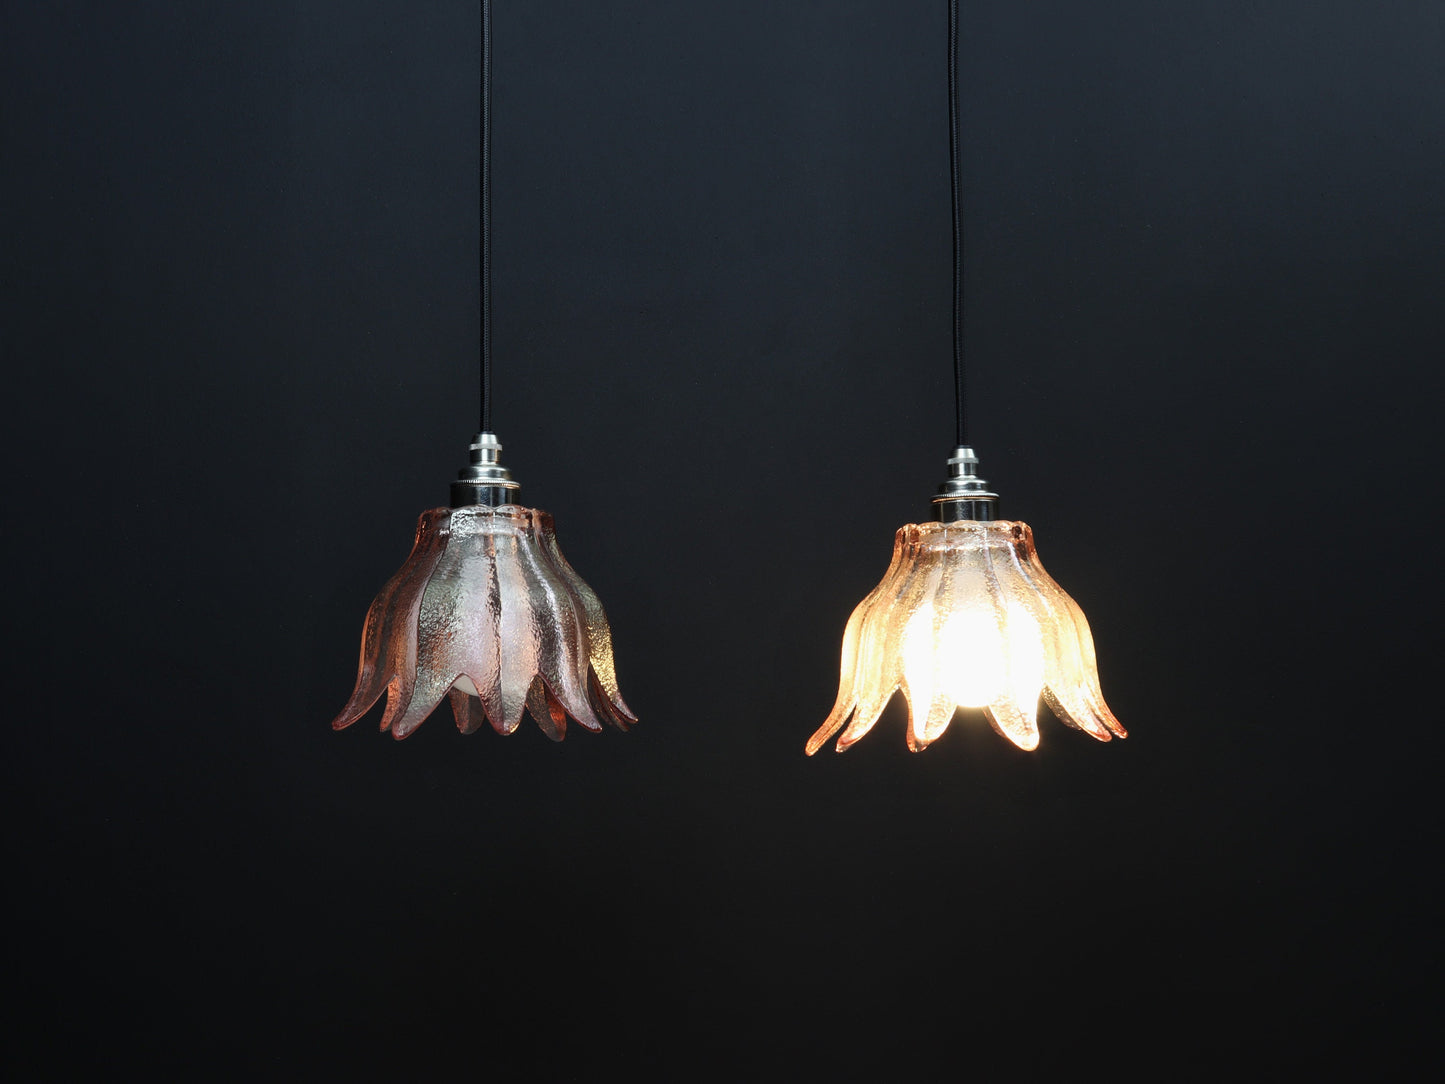 Antique Lighting Transformed into Stylish Modern Pendant Lights